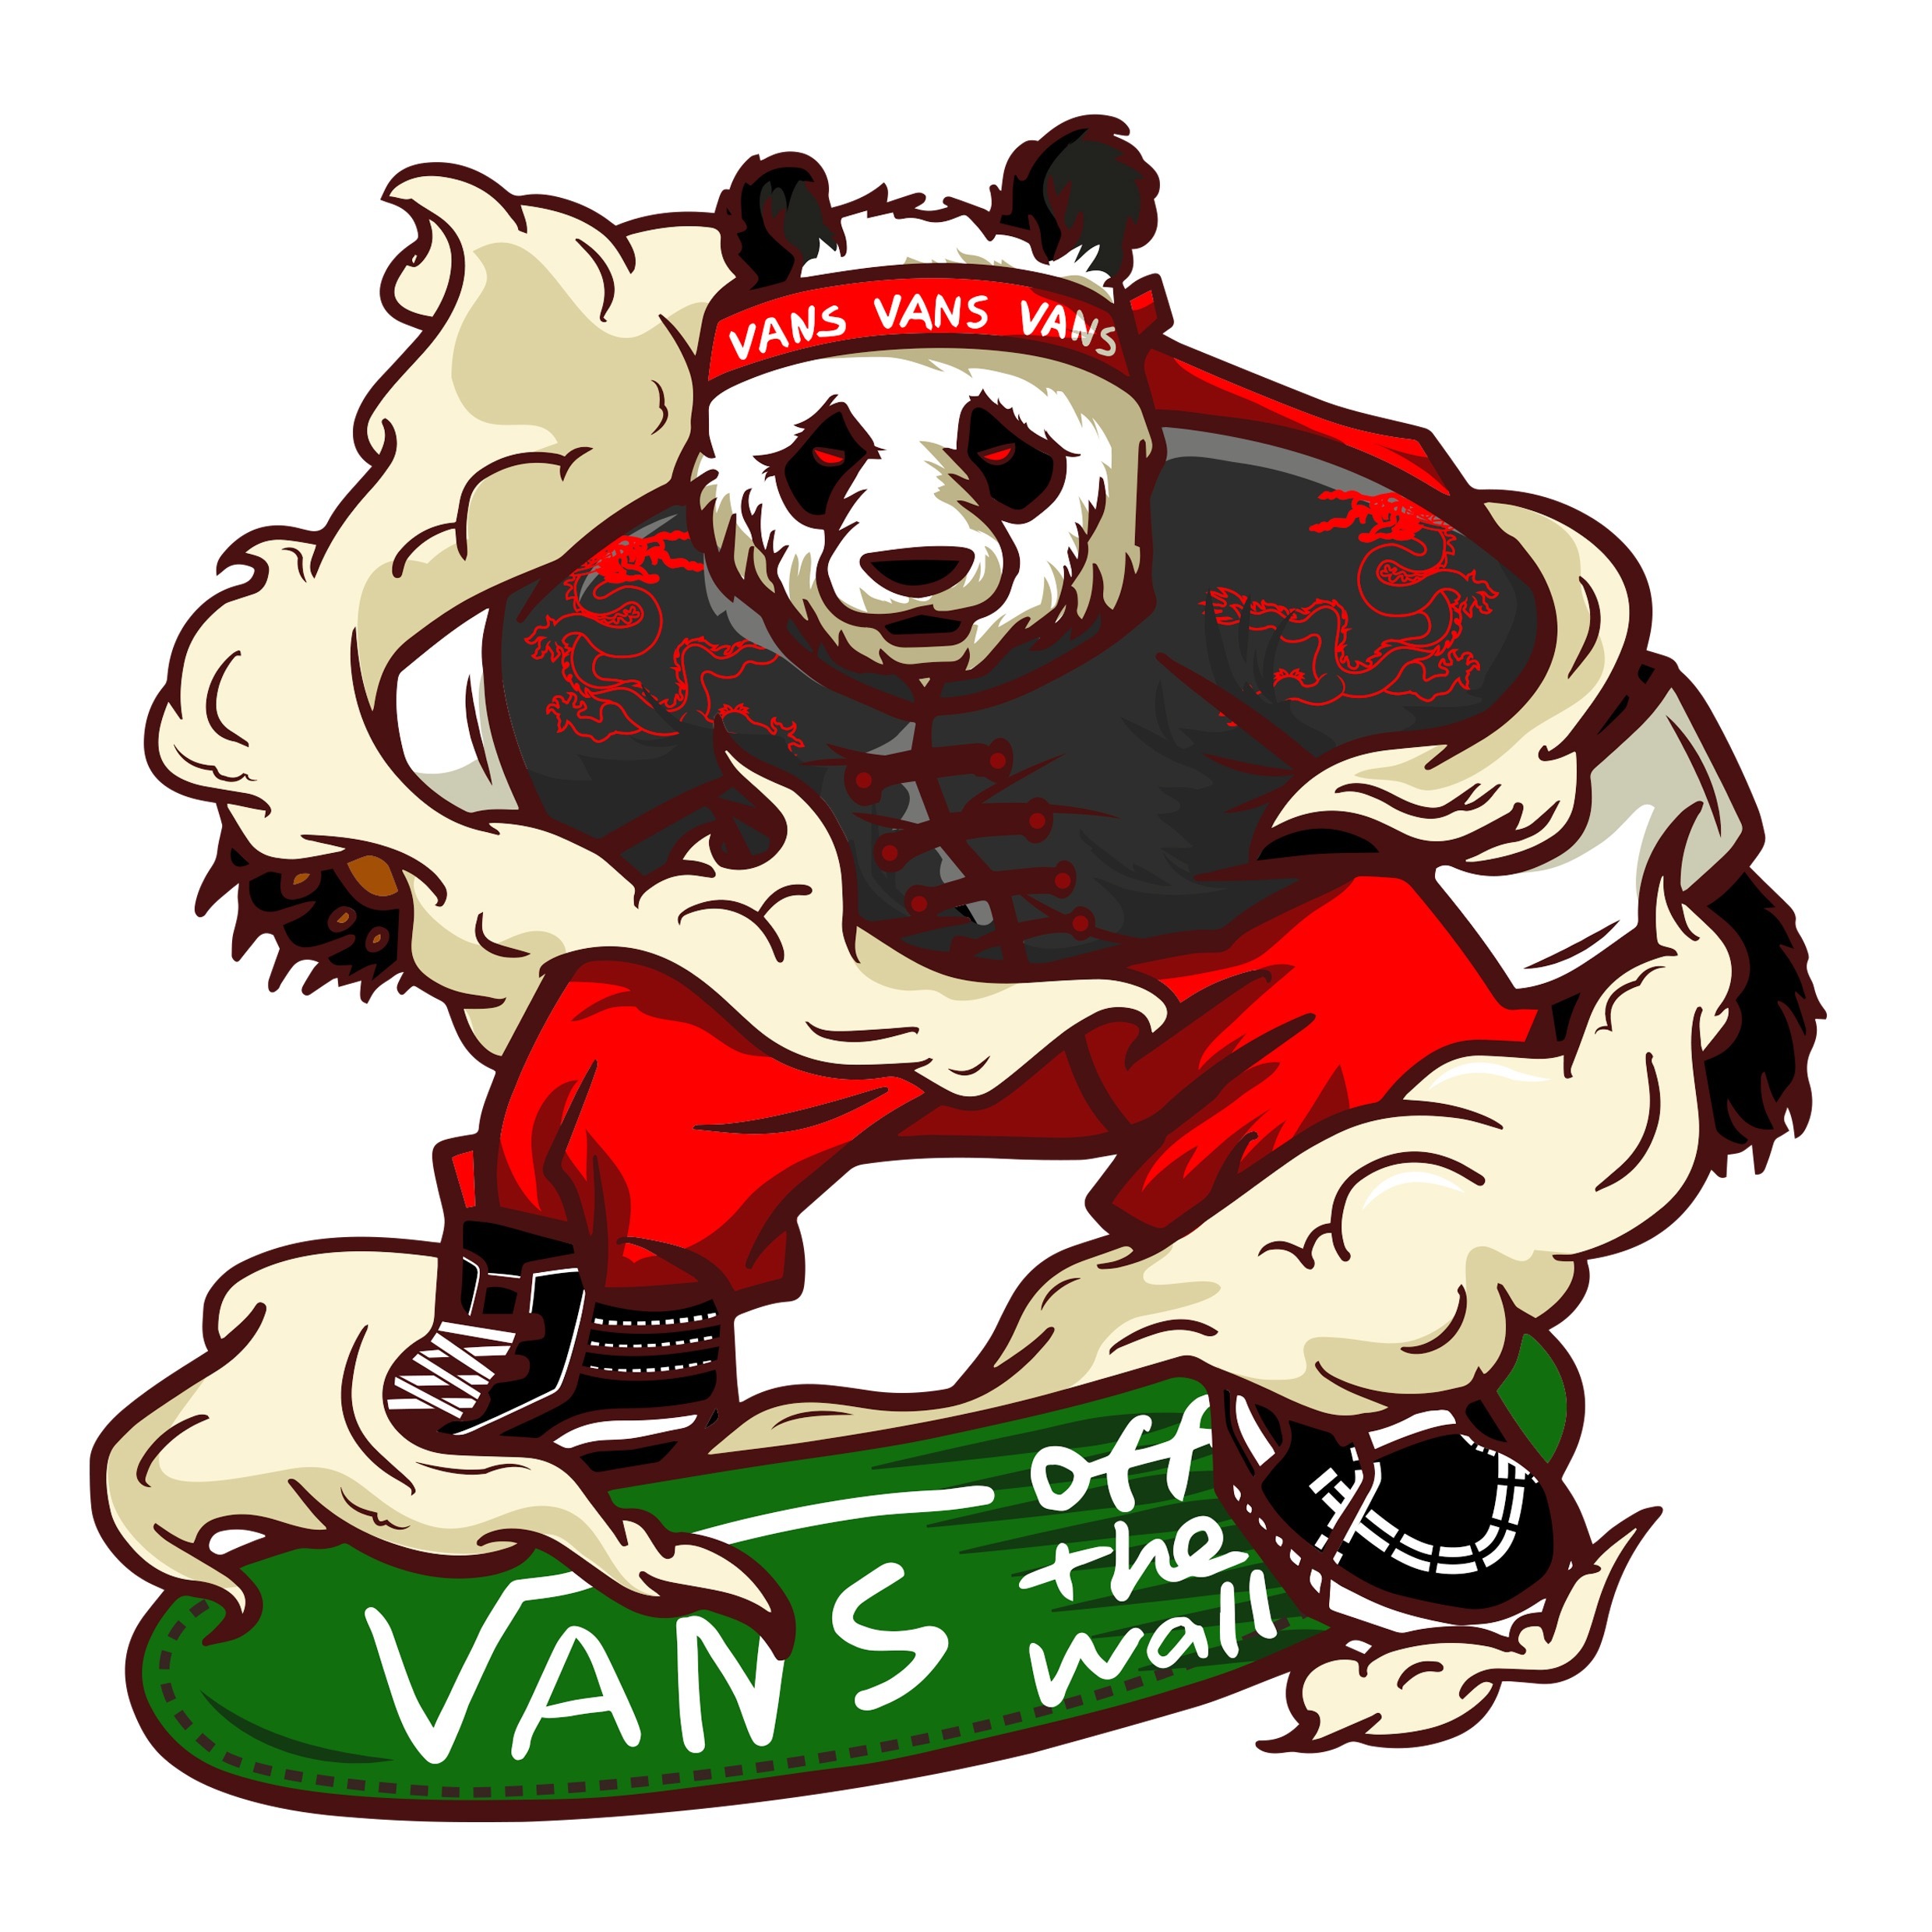 vans off the wall 熊猫滑板中国风插画